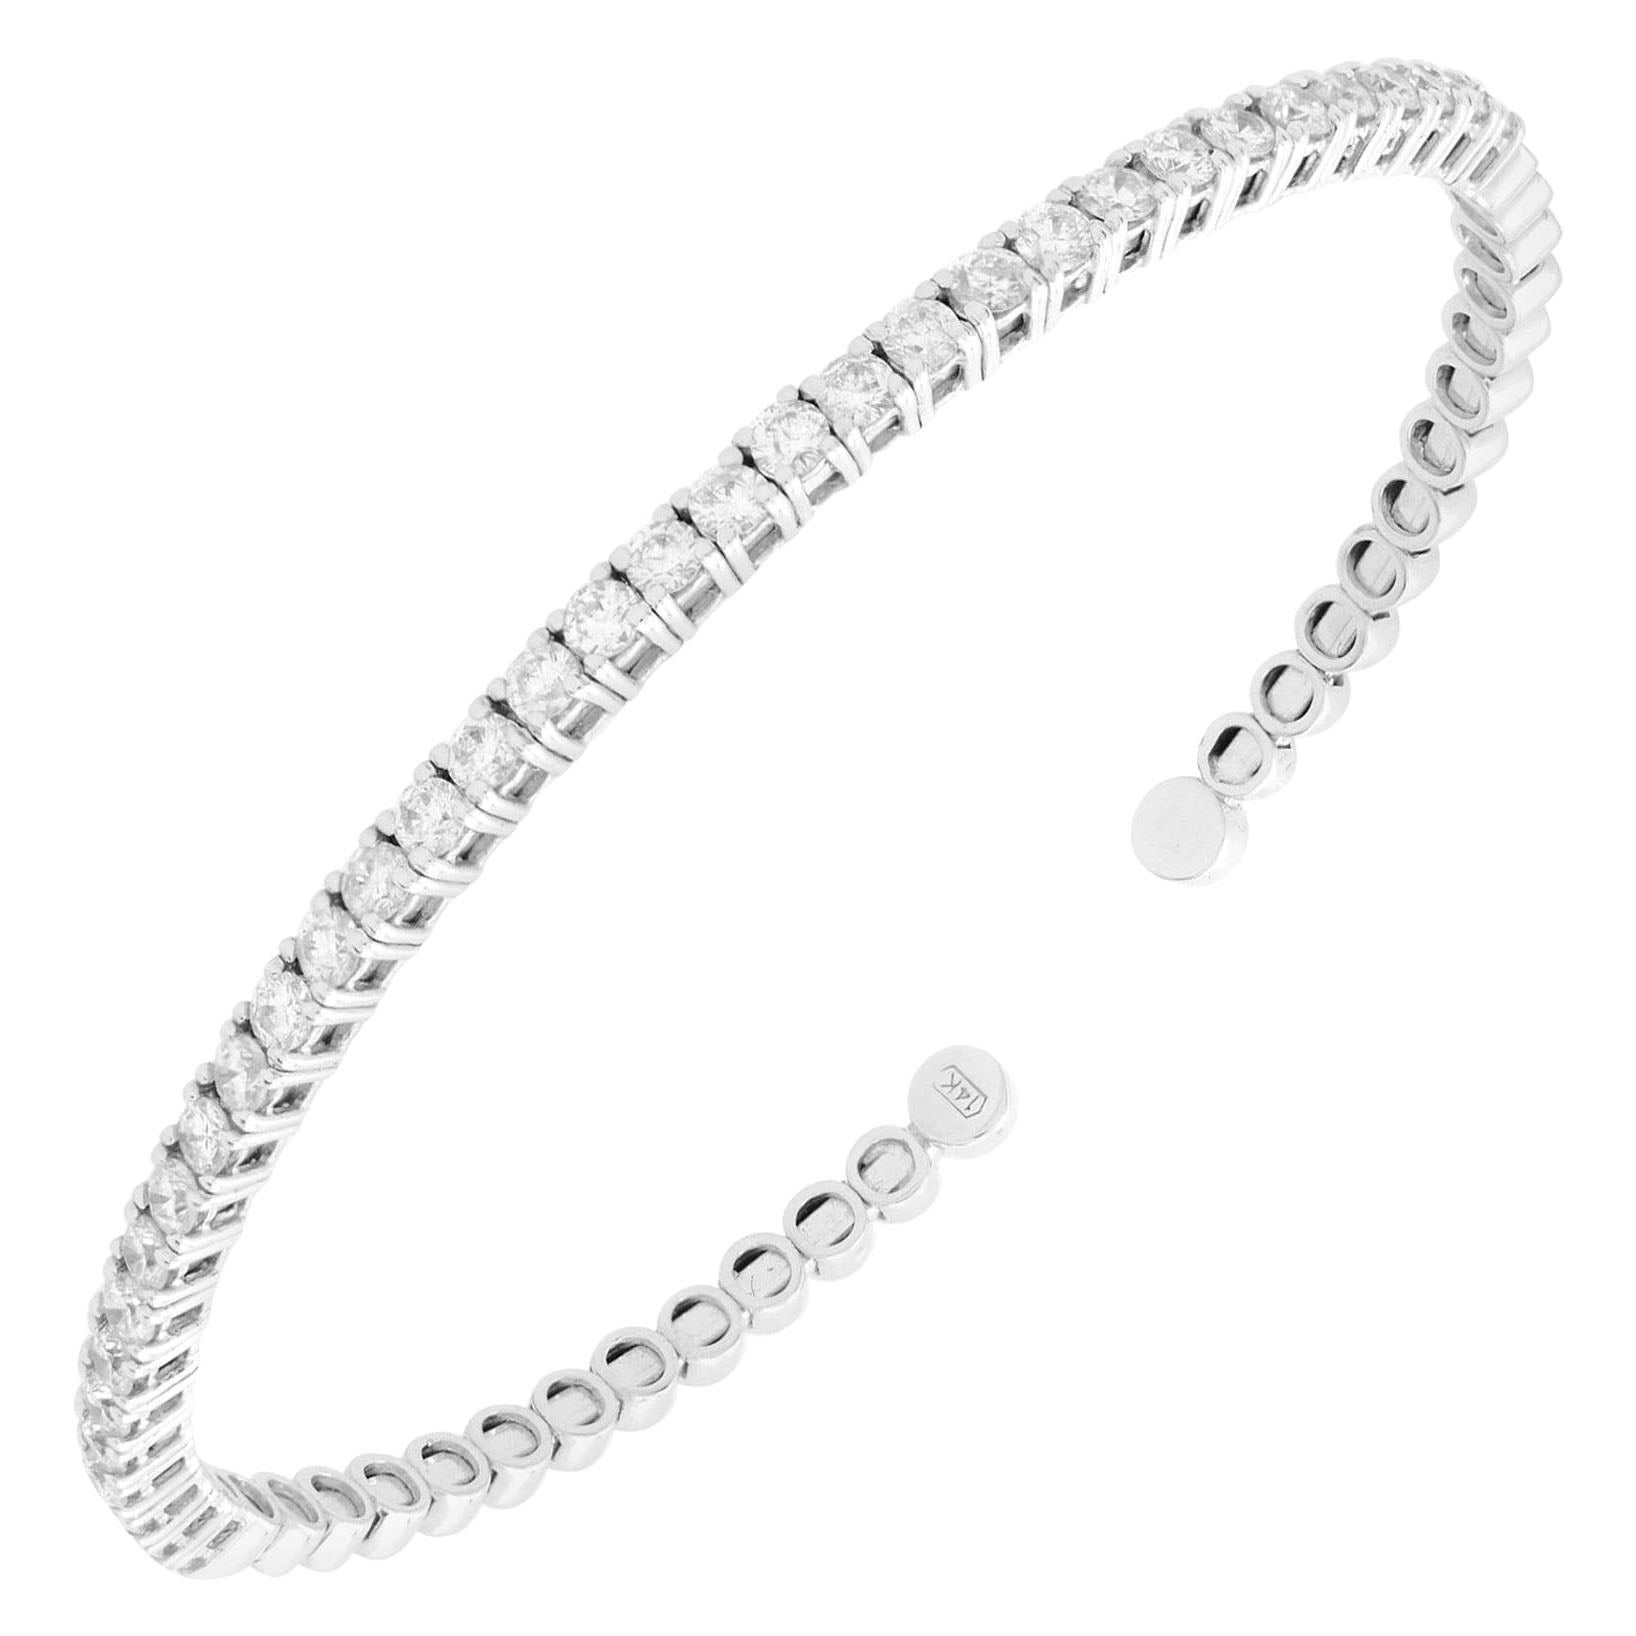 Rachel Koen Diamond Ladies Cuff Bracelet 14K White Gold 1.88cttw For Sale